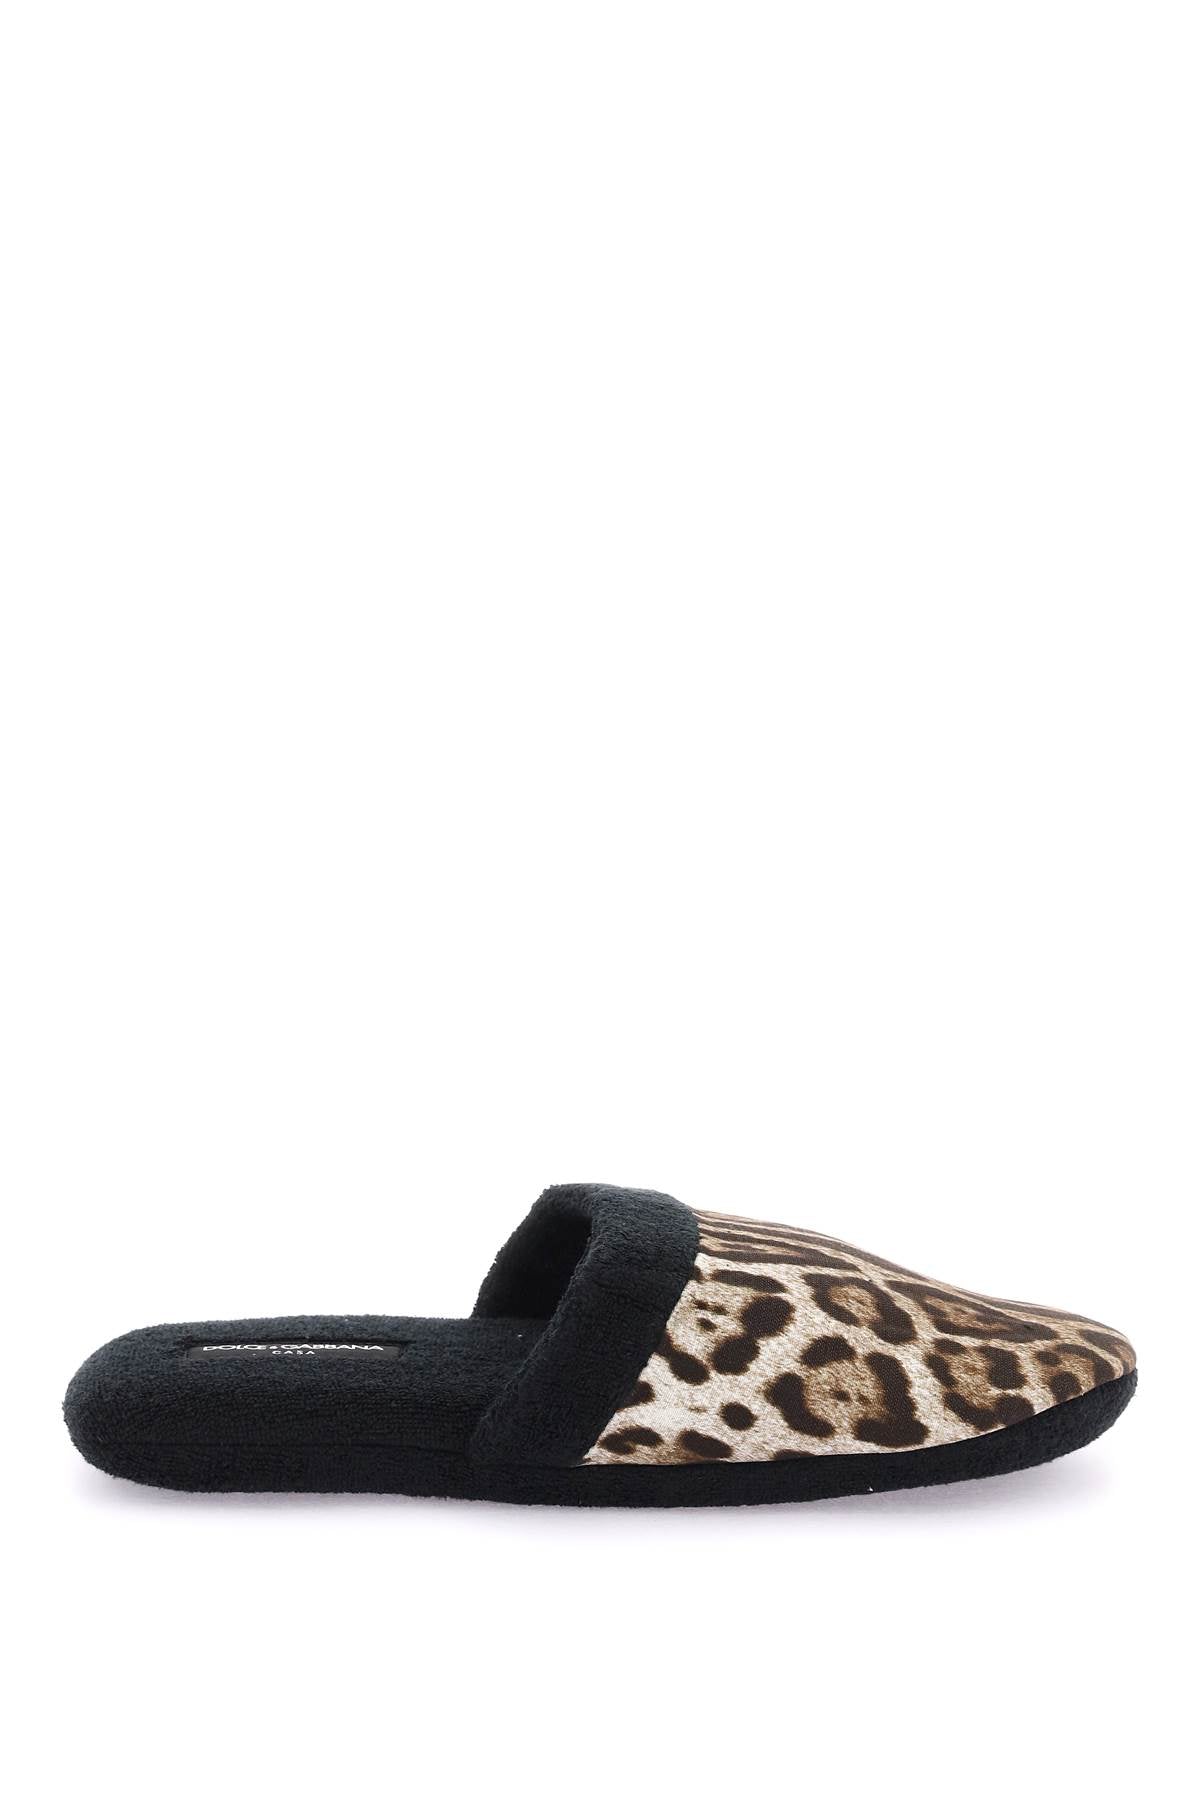 Dolce & gabbana 'leopardo' terry slippers-0